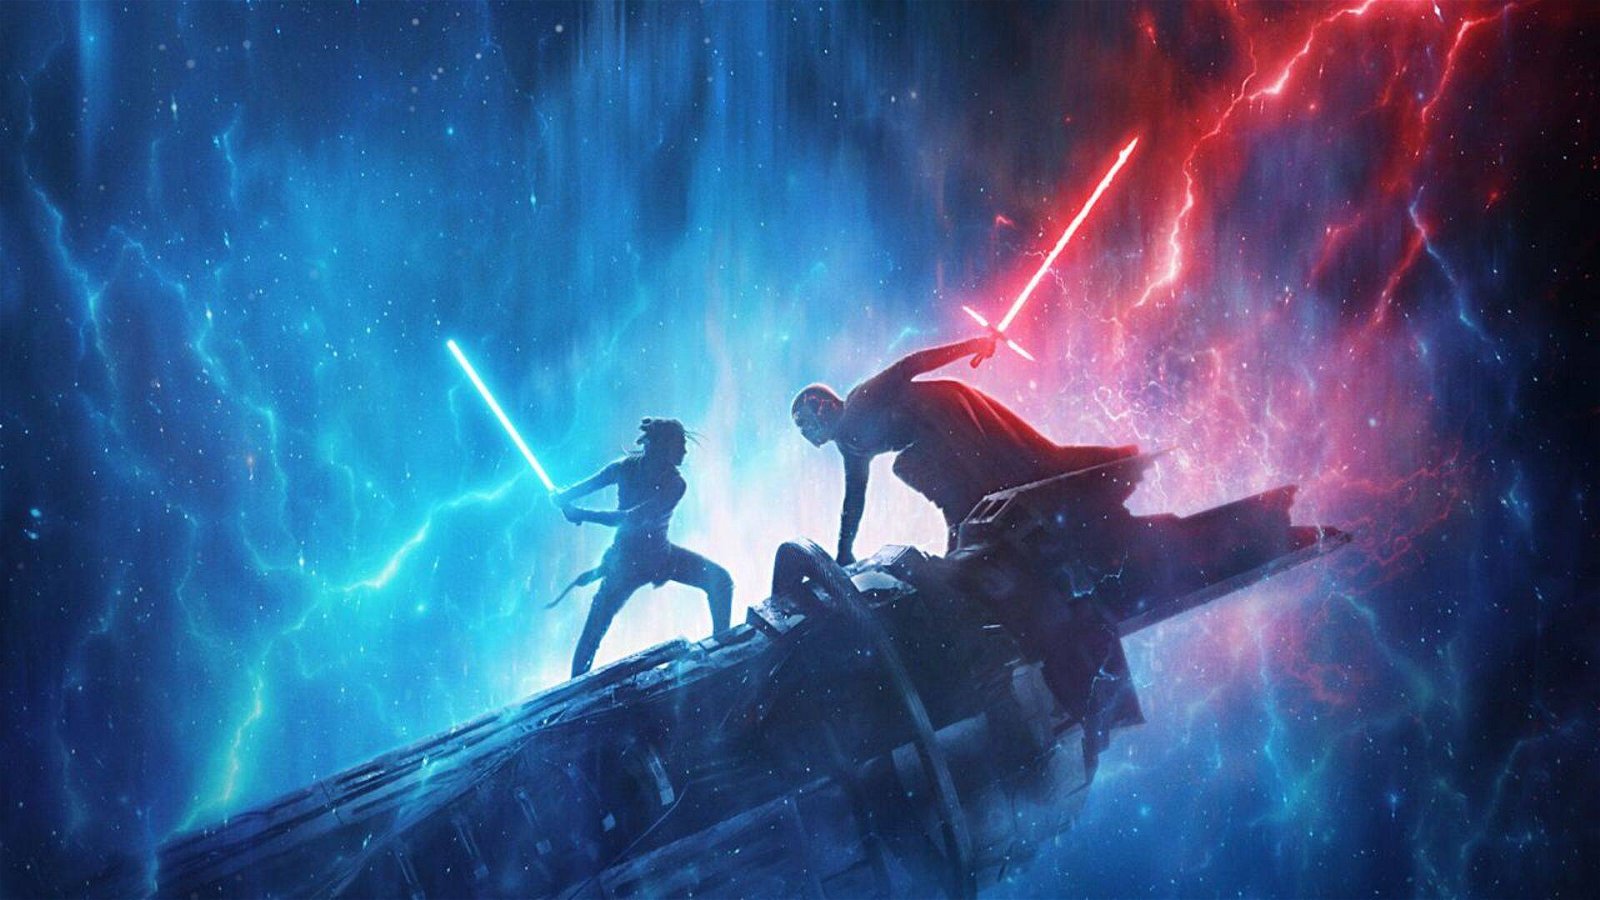 Immagine di Star Wars: The Rise of Skywalker, nel trailer appare Ghost